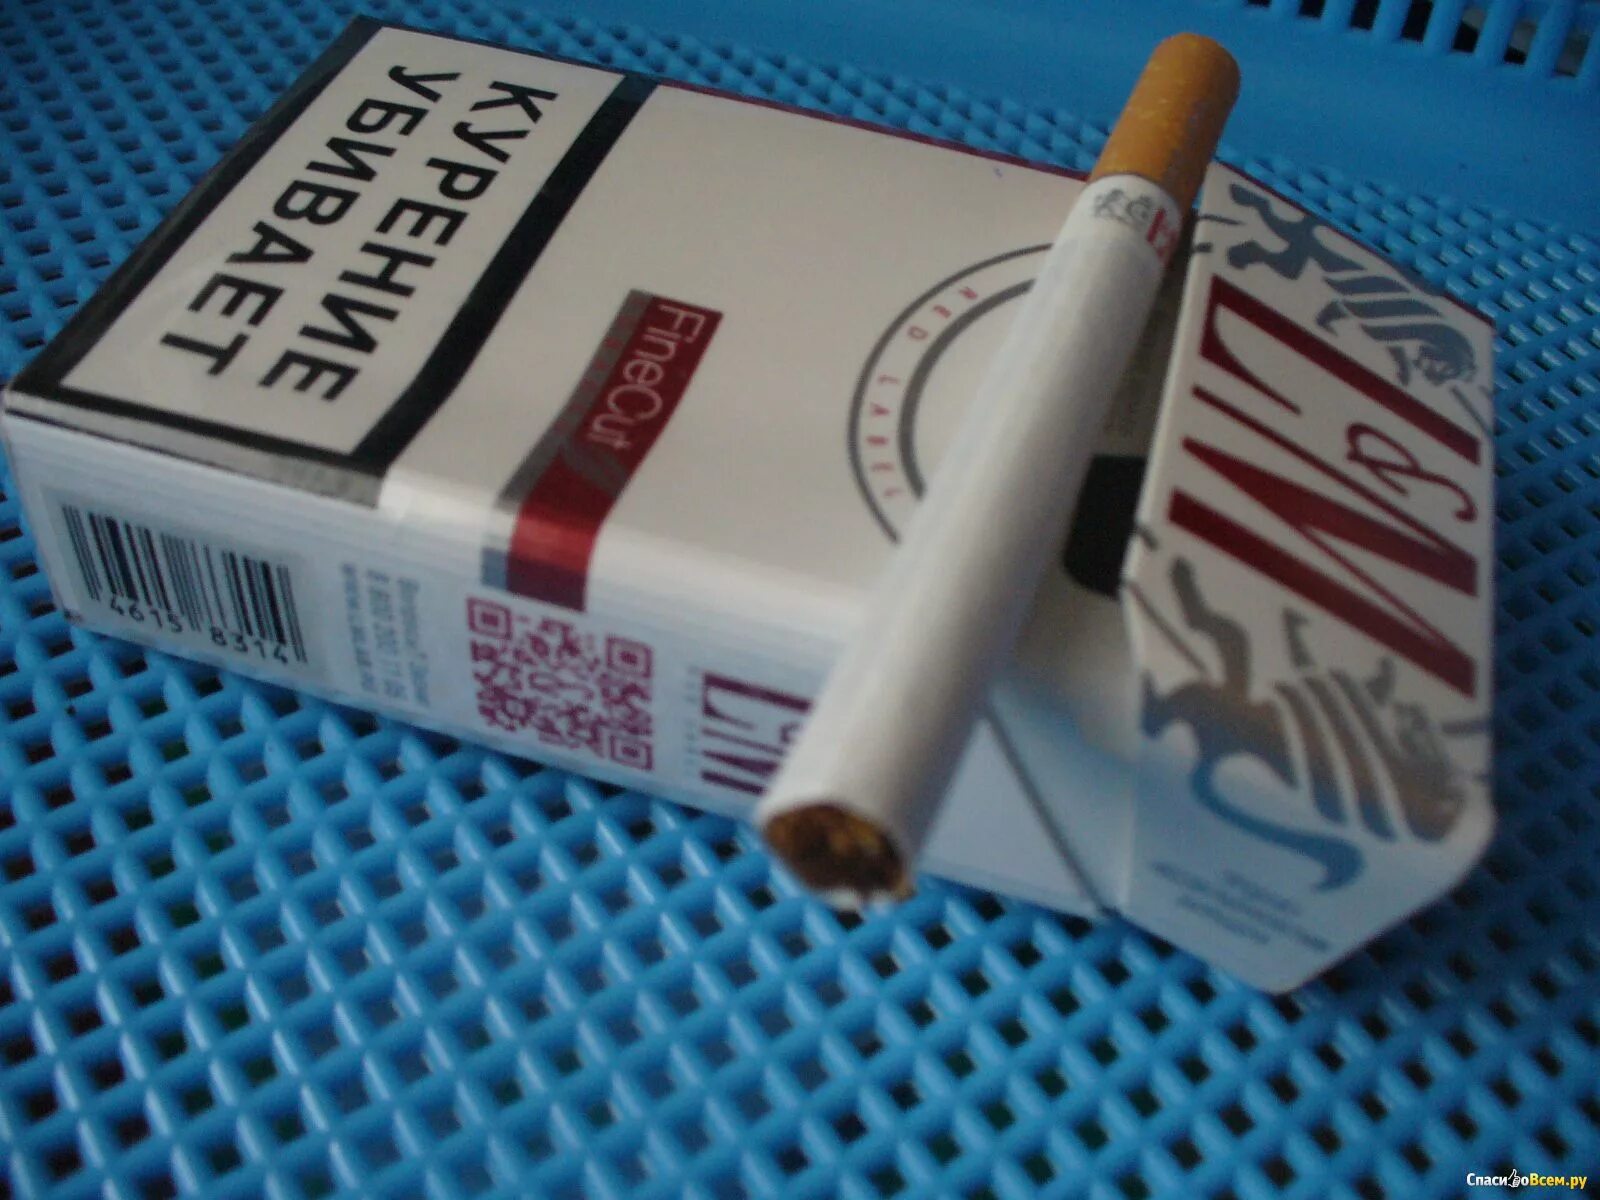 Сигареты LM Red Label. Сигареты LM красный МРЦ. Сигареты LM Red Compact. L M сигареты красные. Сигареты компакт красные